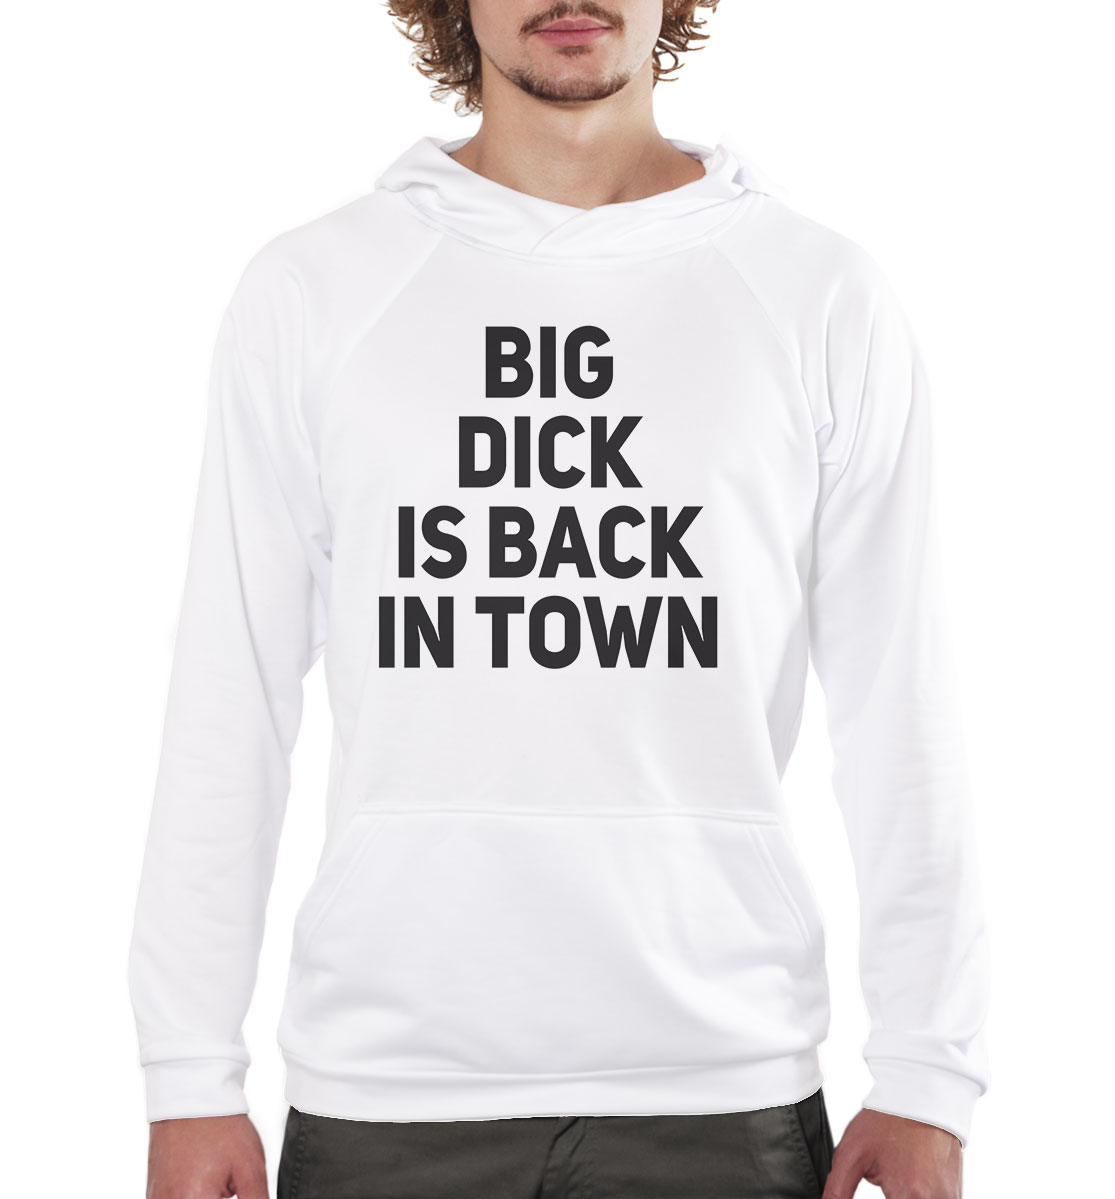 Big dick back in town shirt